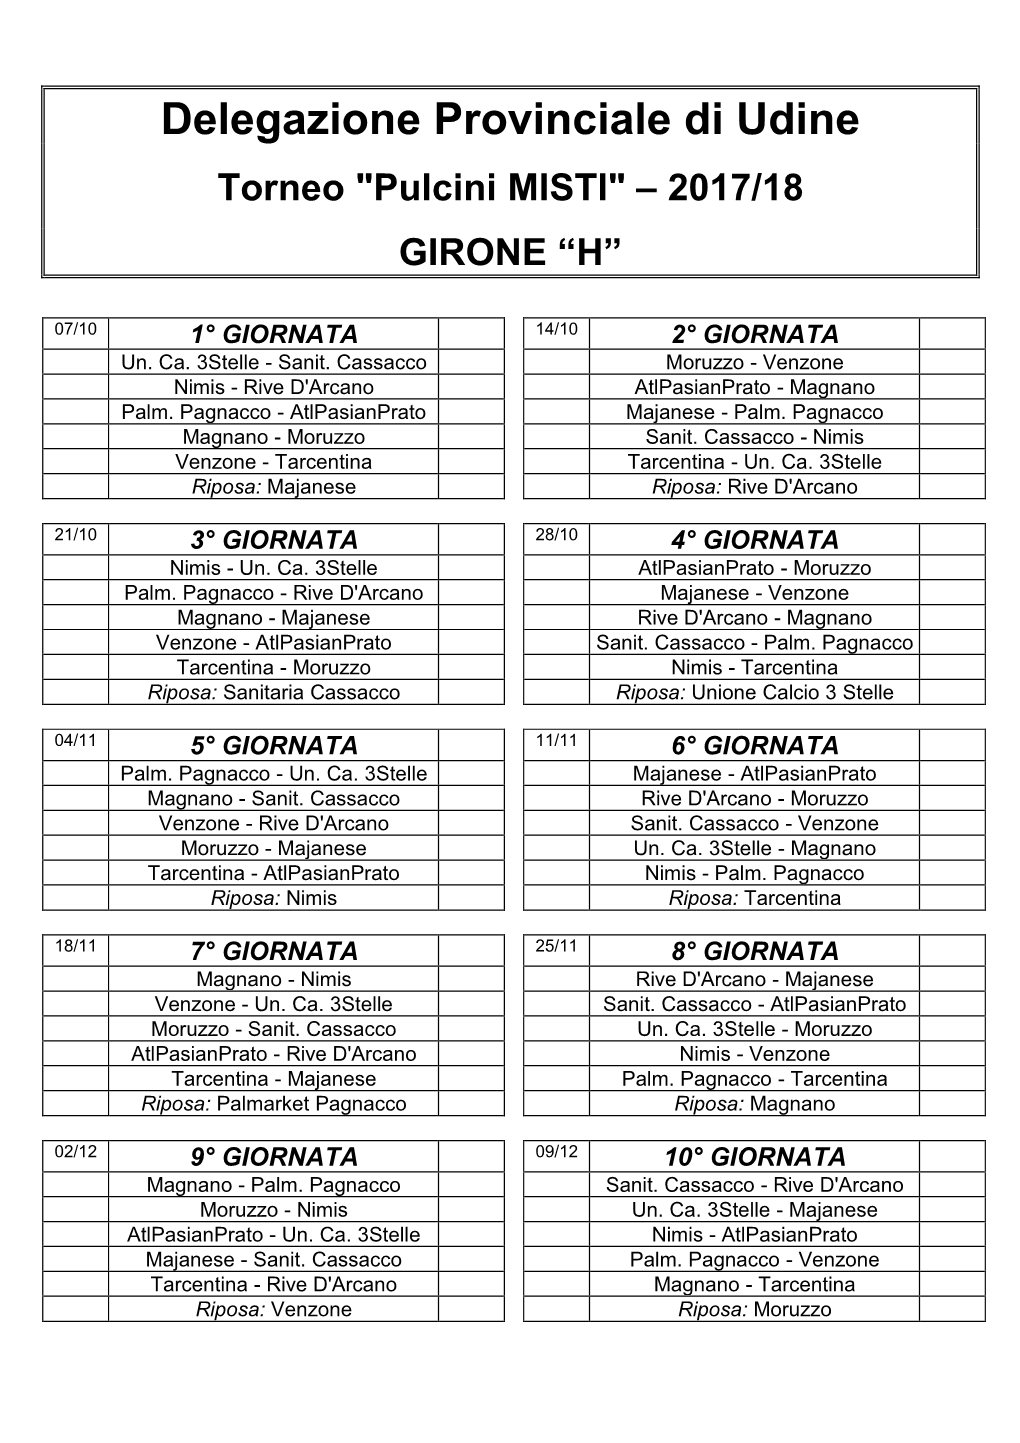 Delegazione Provinciale Di Udine Torneo "Pulcini MISTI" 2017/18 GIRONE H